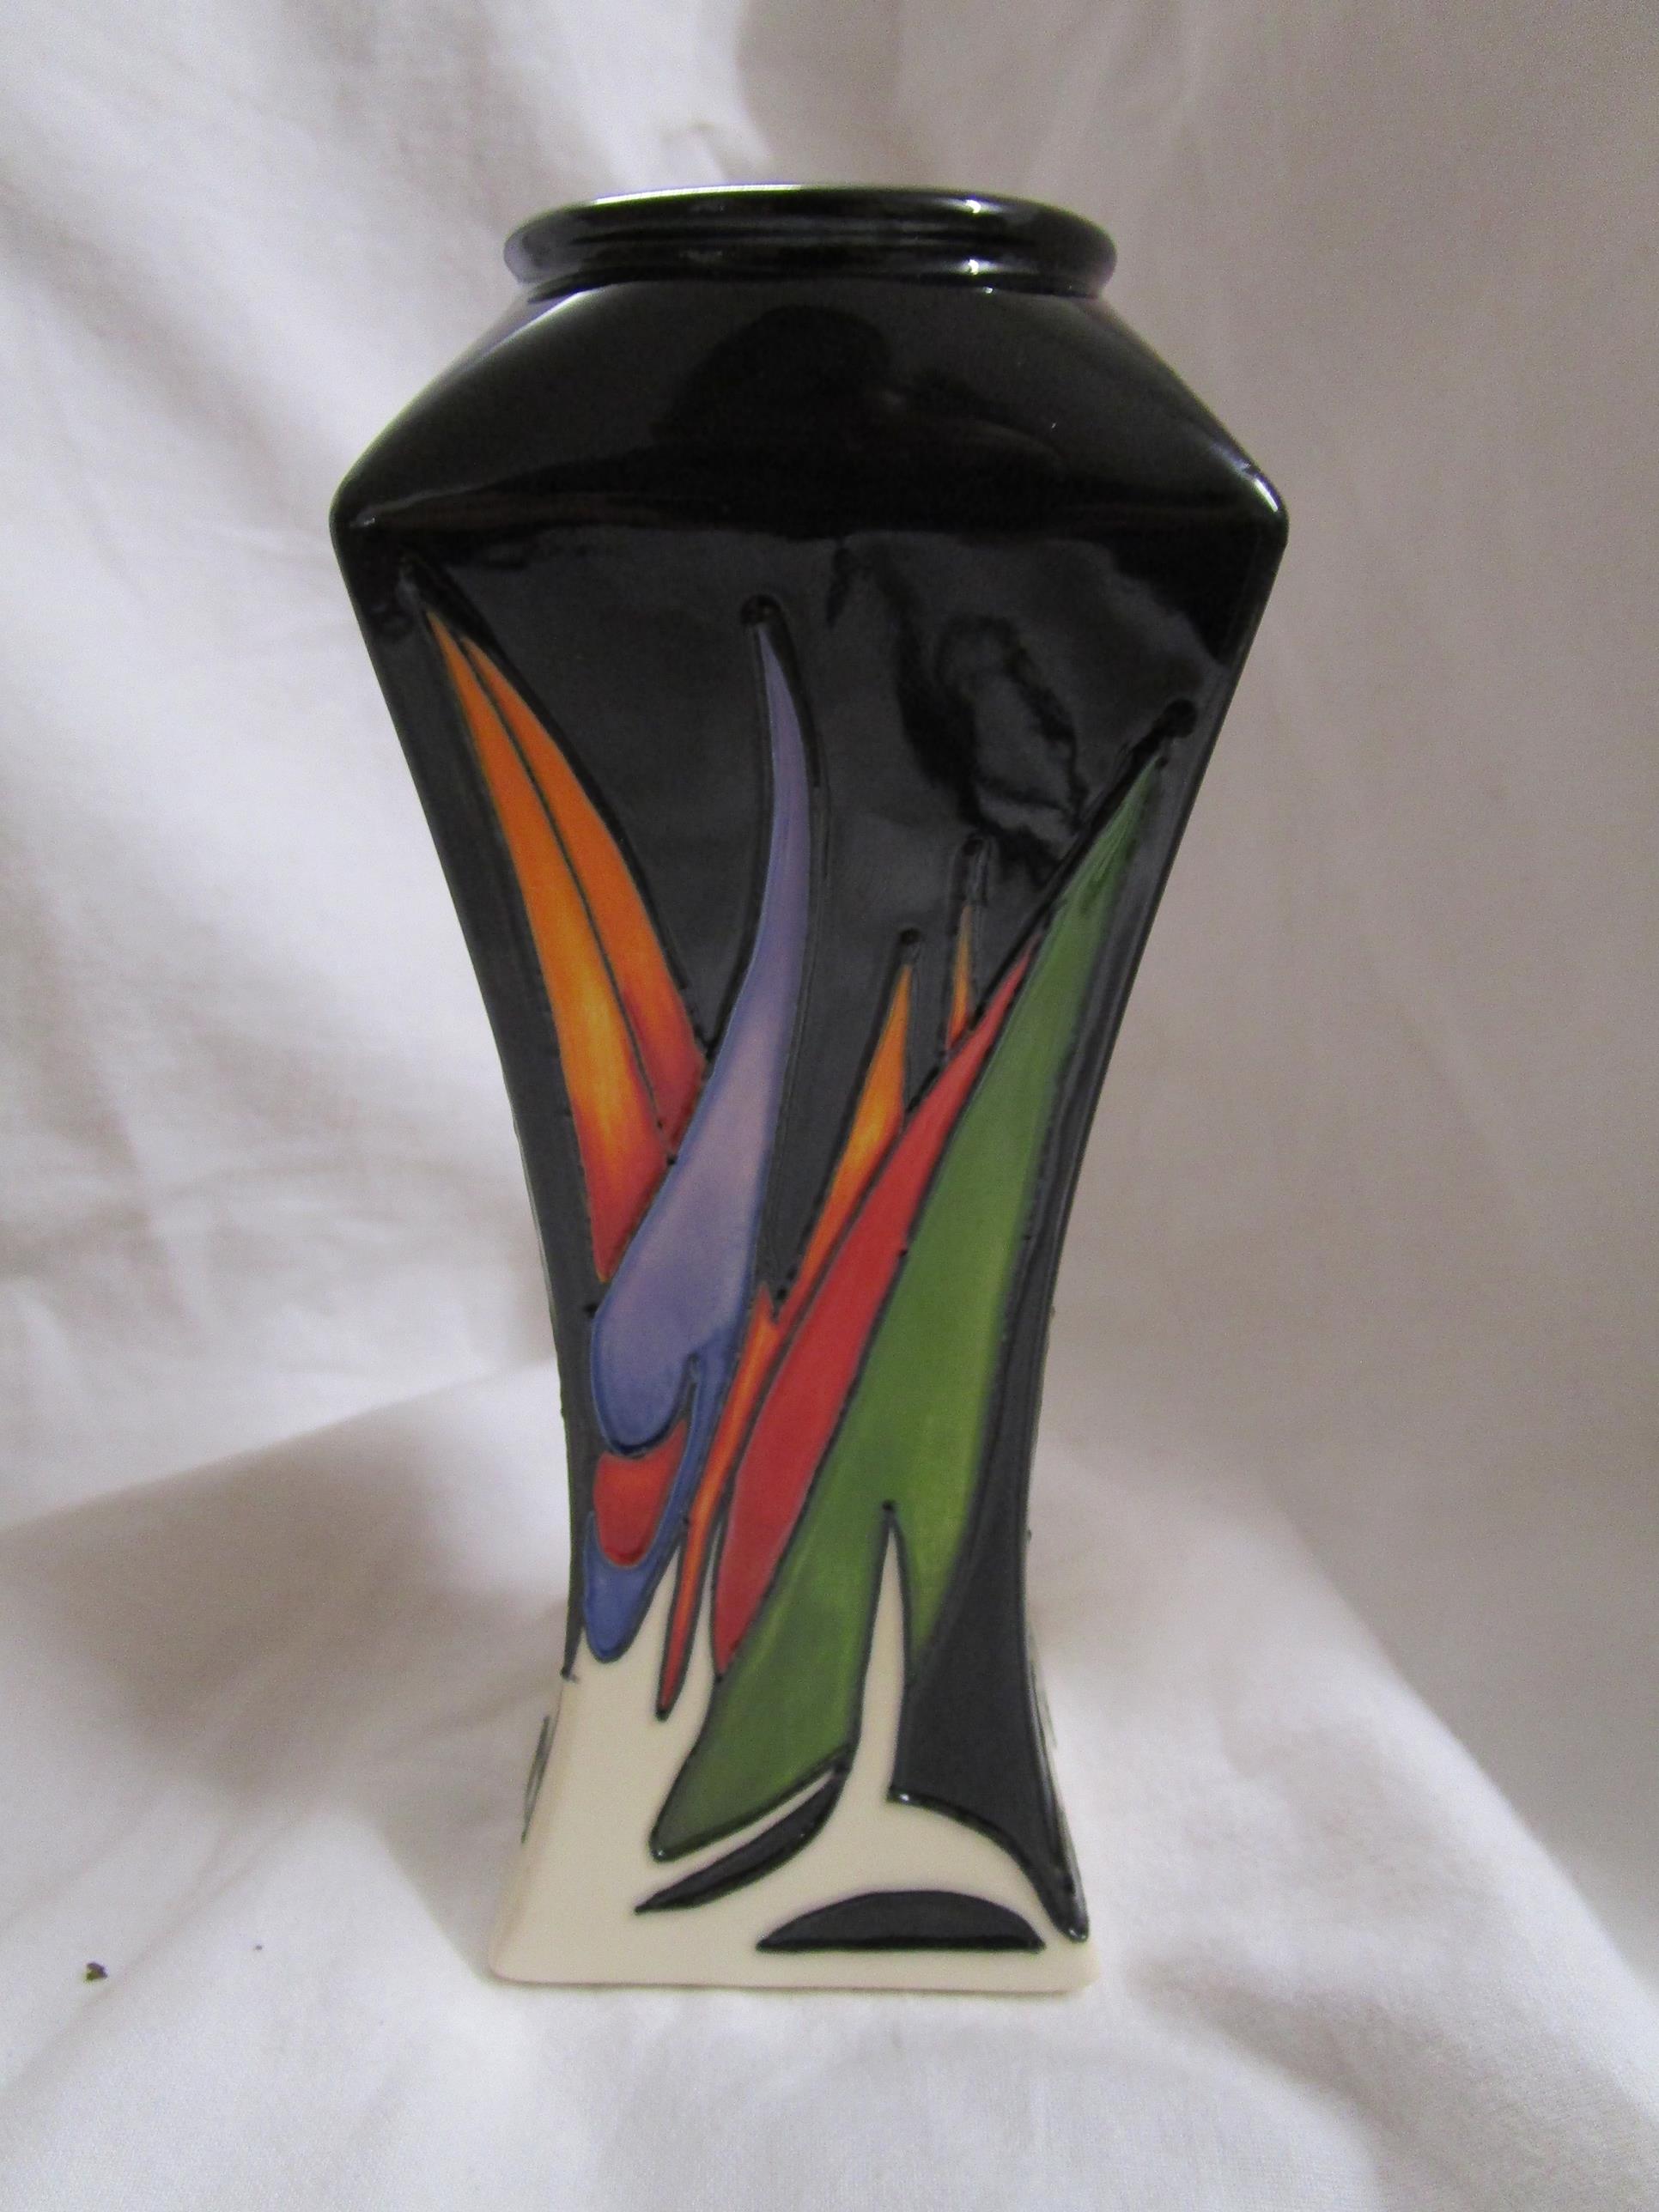 Small Moorcroft vase - Paradise Found by Vicky Lovatt - H: 16cm - Image 4 of 6